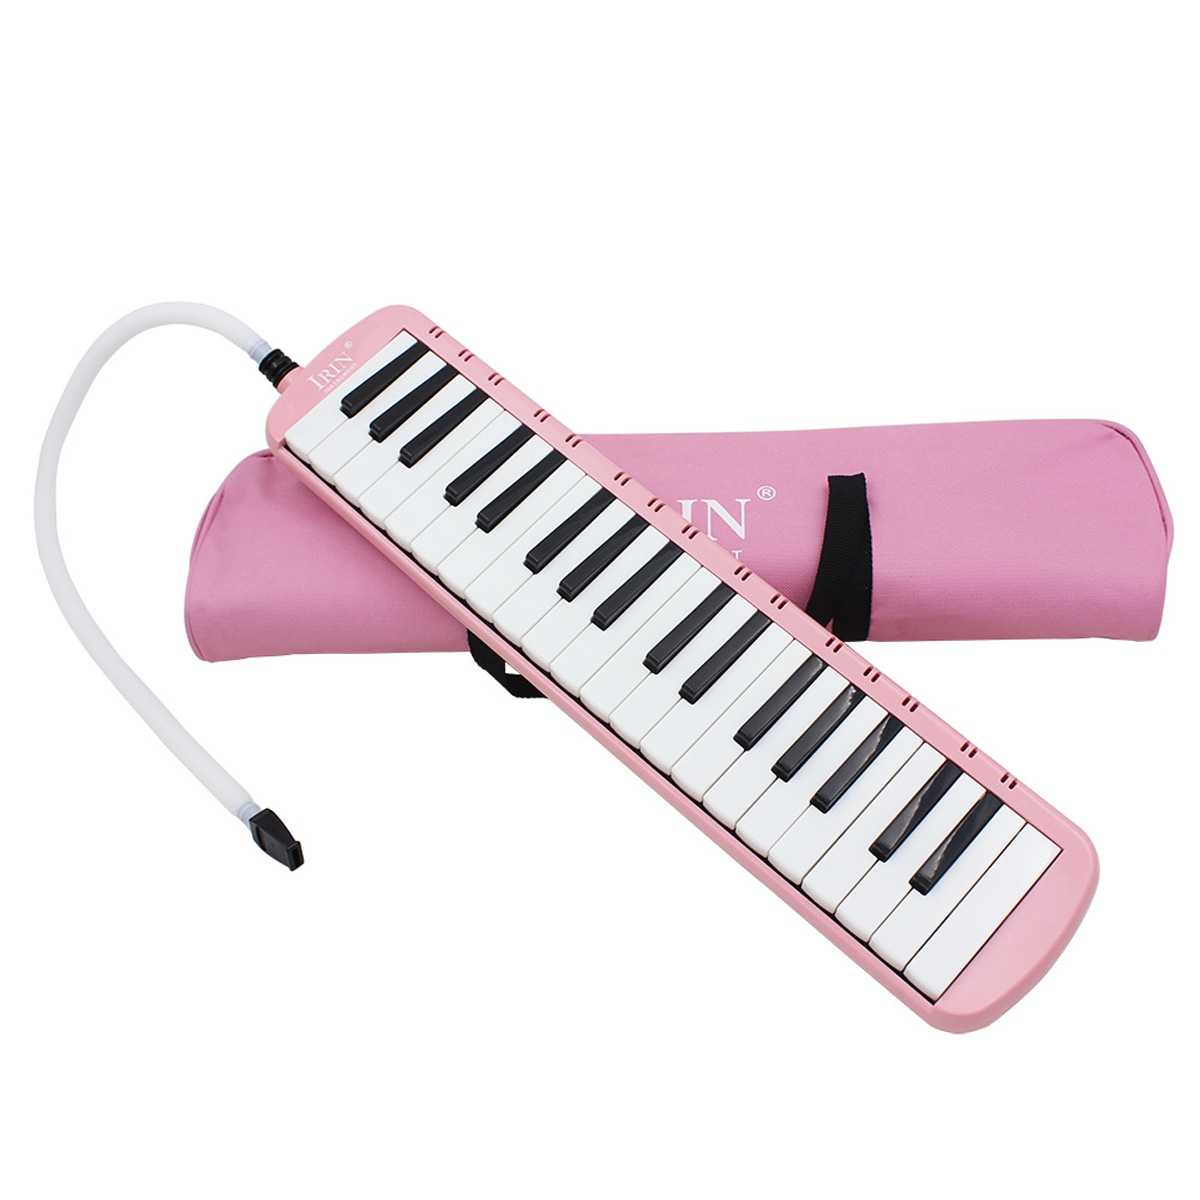 IRIN 37-Key Melodica Harmonica Electronic Keyboard Mouth Organ With Handbag